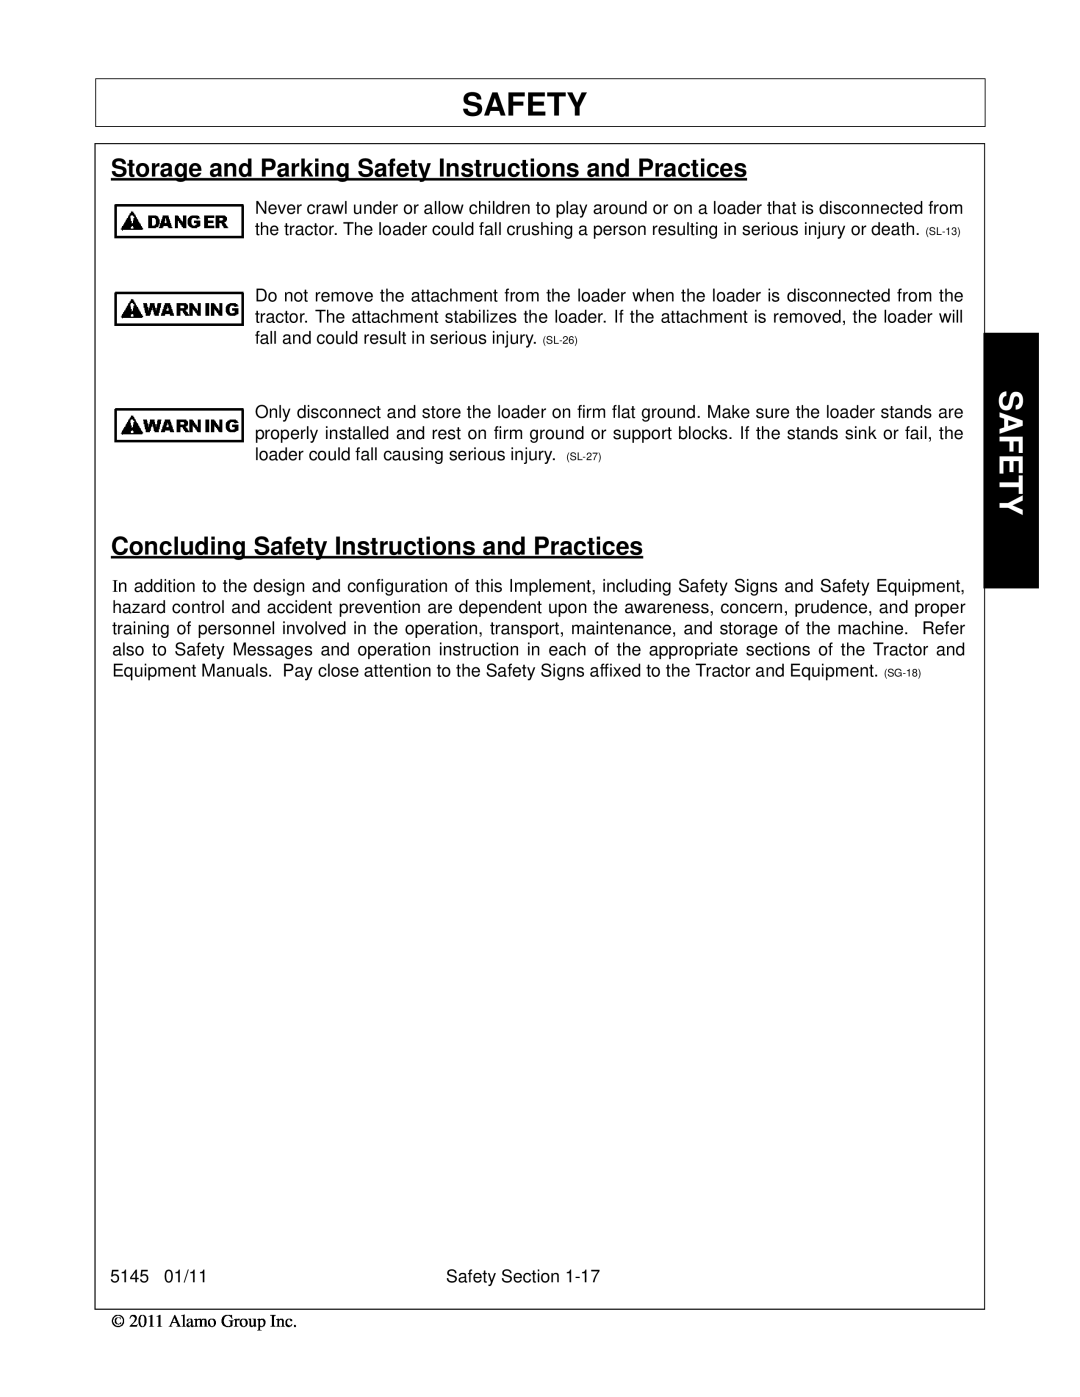 Bush Hog 5145 Storage and Parking Safety Instructions and Practices, Concluding Safety Instructions and Practices 